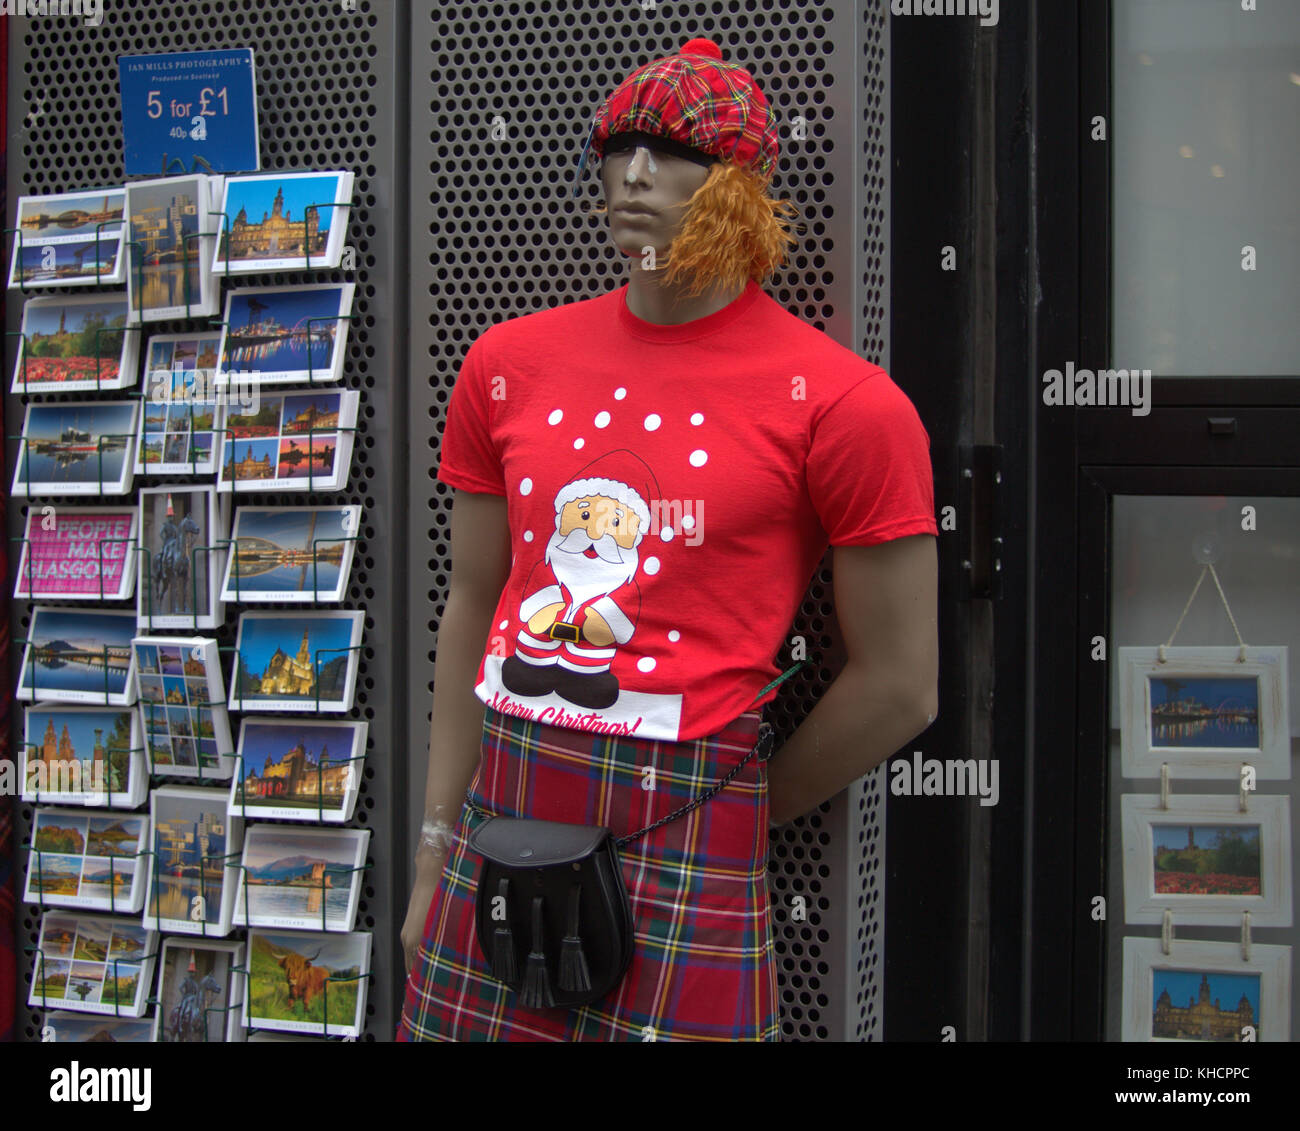 Escocia Escocia navidad tartan jimmy peluca camiseta postales turismo funny ha ha. Foto de stock